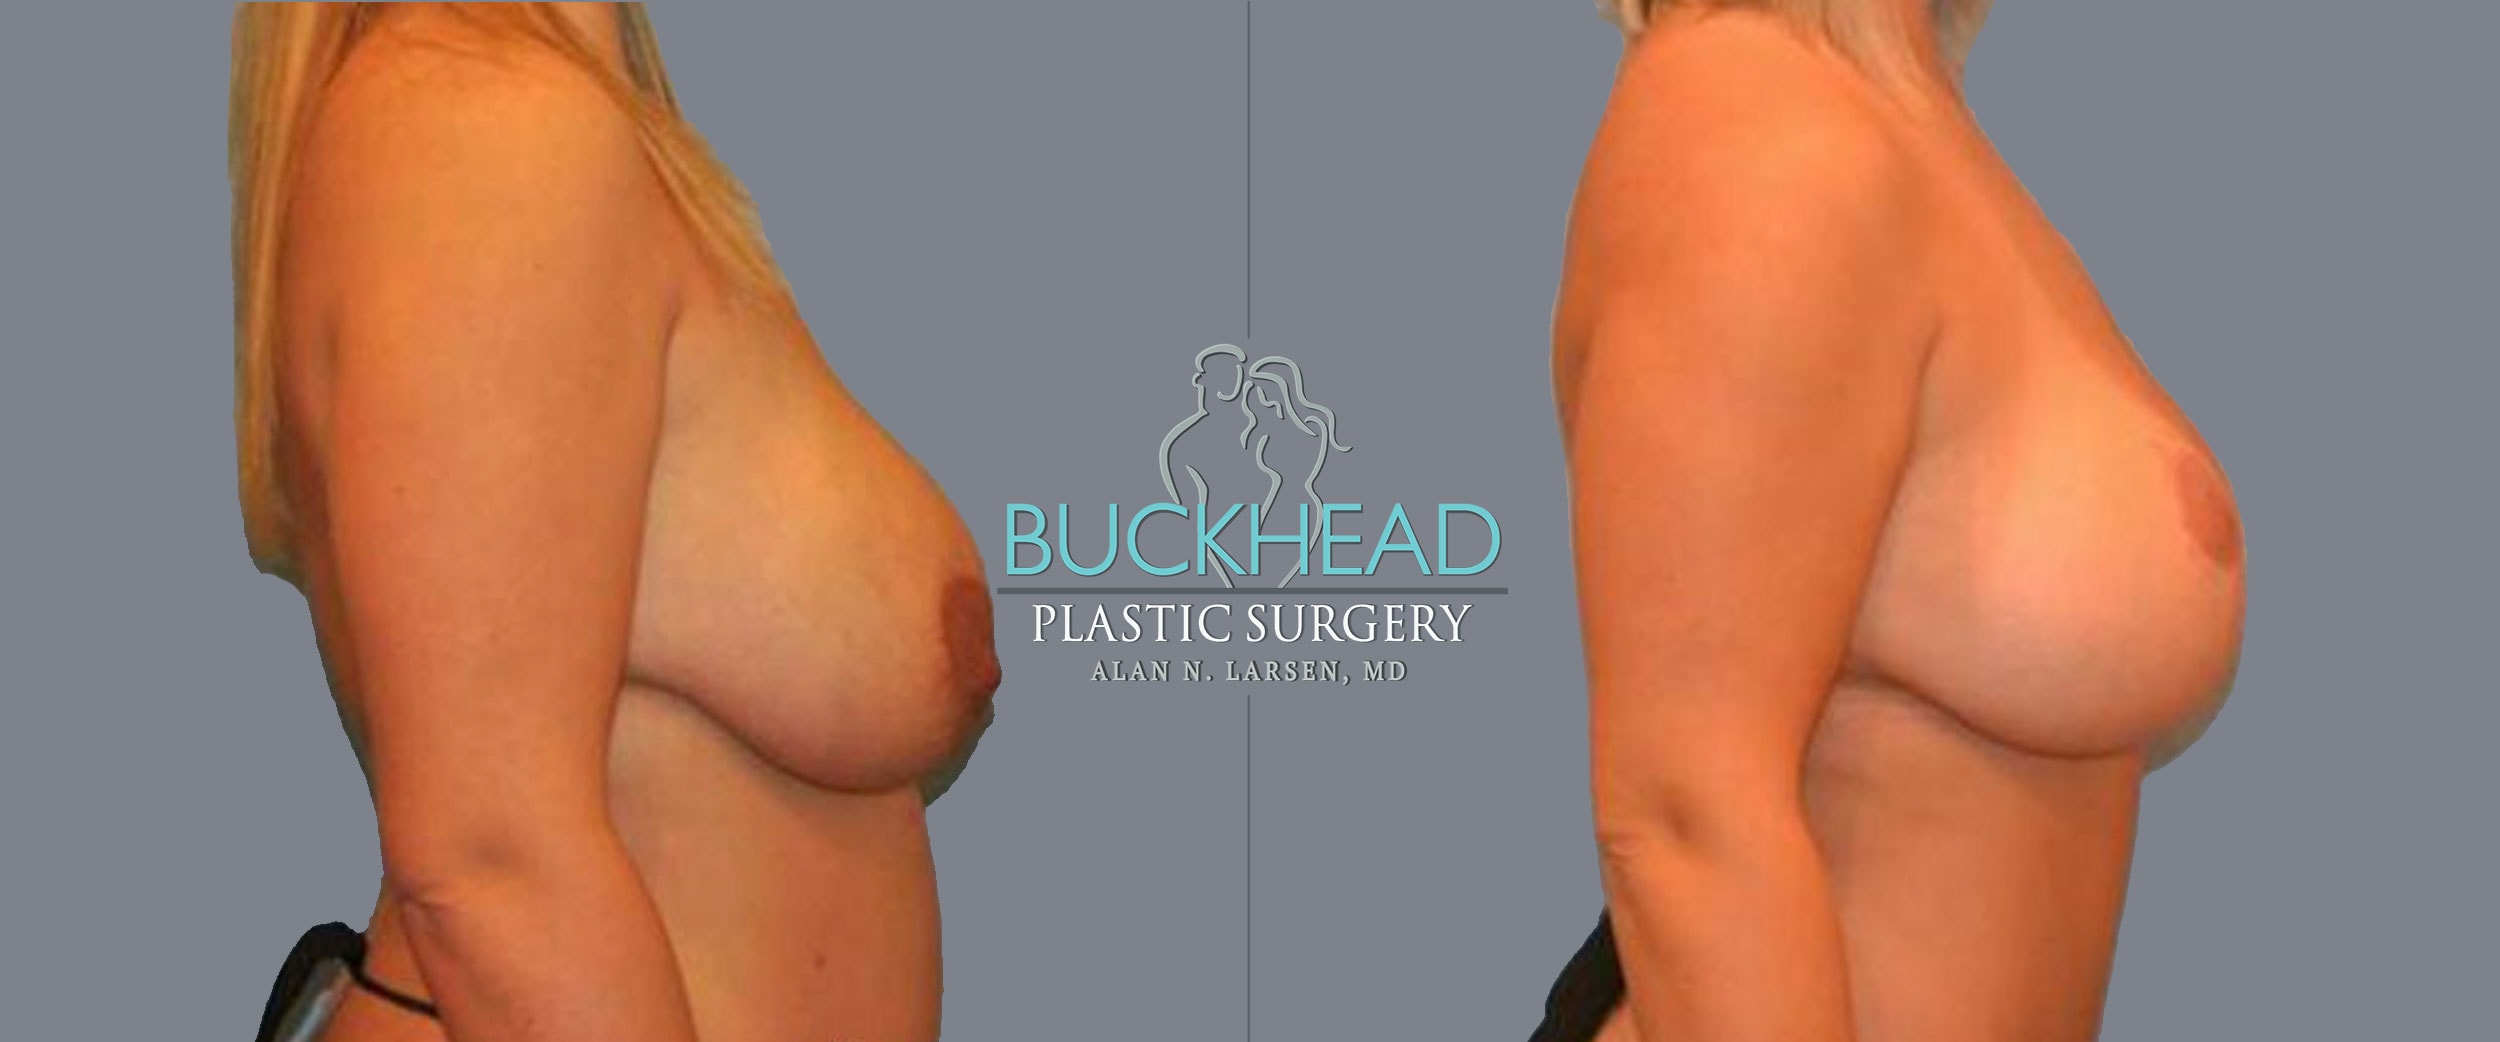 Before and After Photo Gallery | Breast Lift | Buckhead Plastic Surgery | Alan N. Larsen, MD | Board-Certified Plastic Surgeon | Atlanta GA